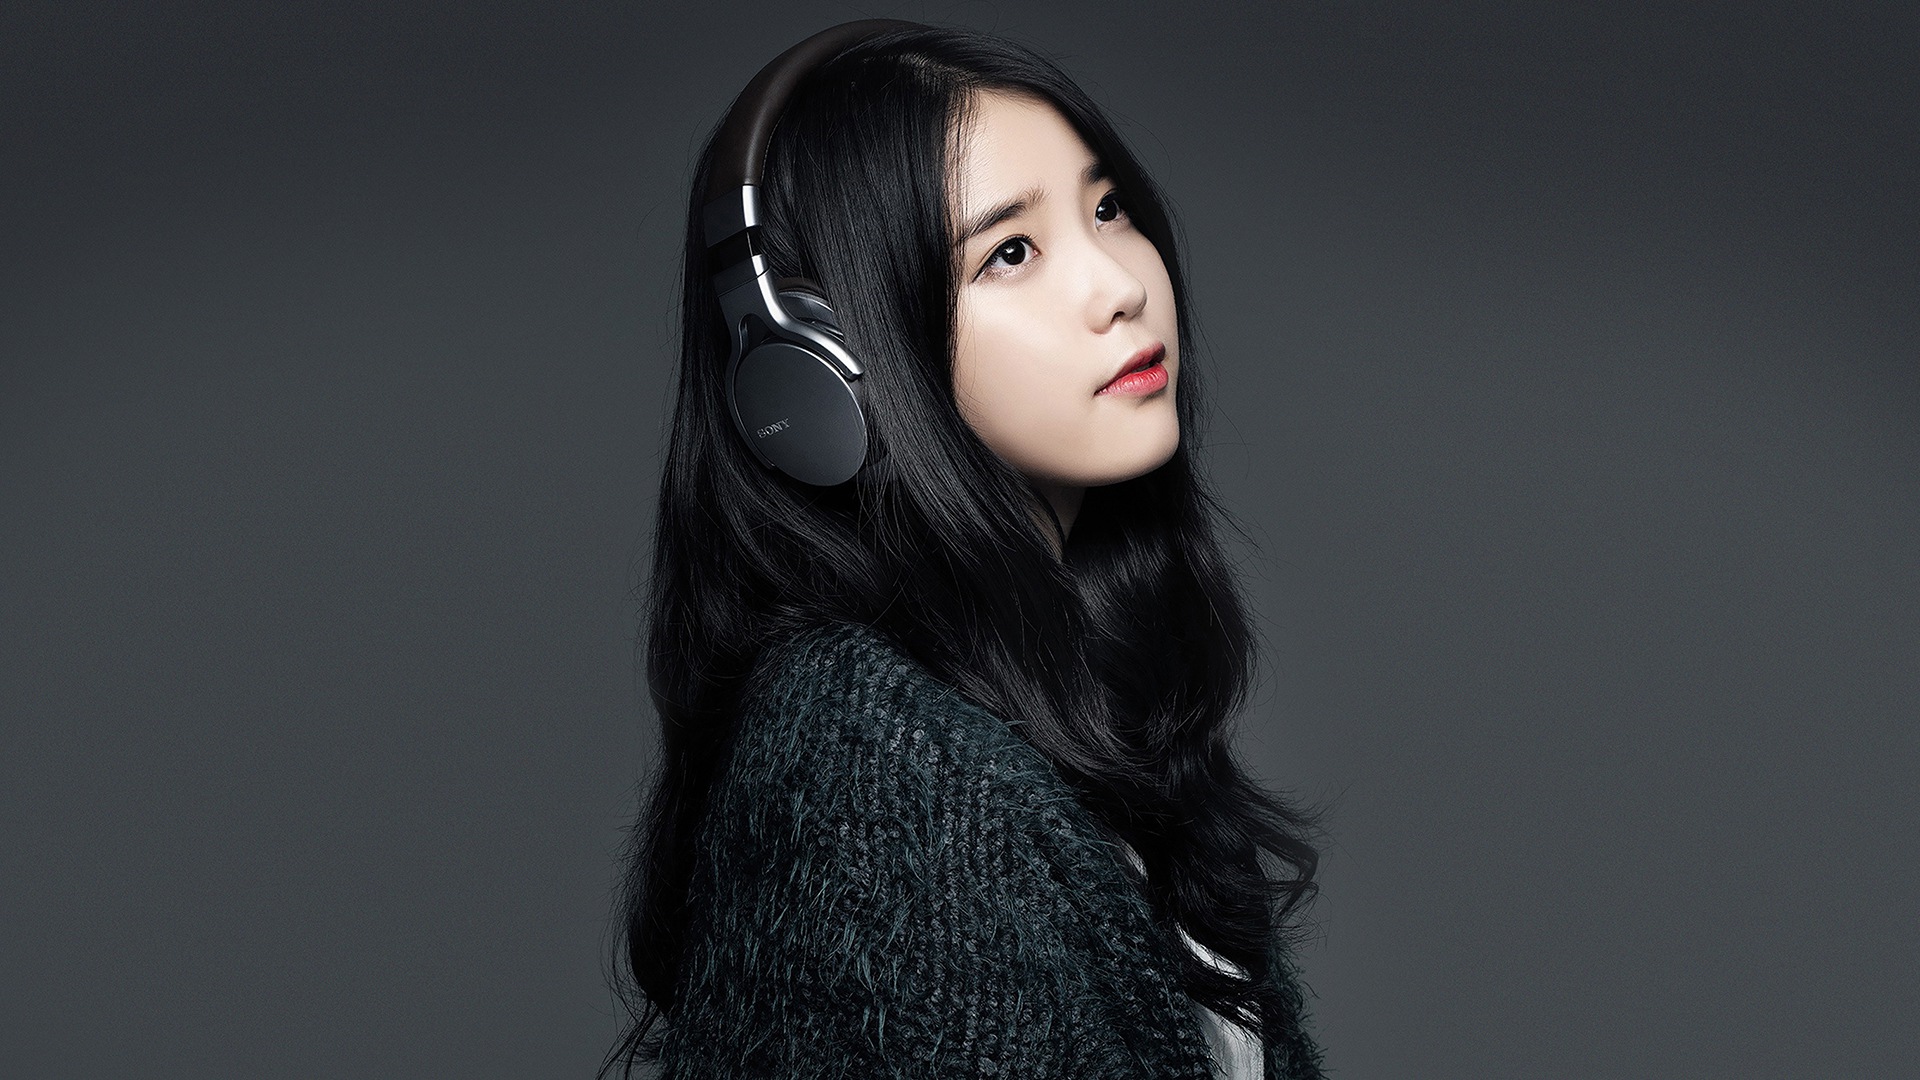 Desktop Wallpaper Lee Ji Eun, Iu, South Korean, K Pop Singer, HD Image, Picture, Background, Yzyyhy